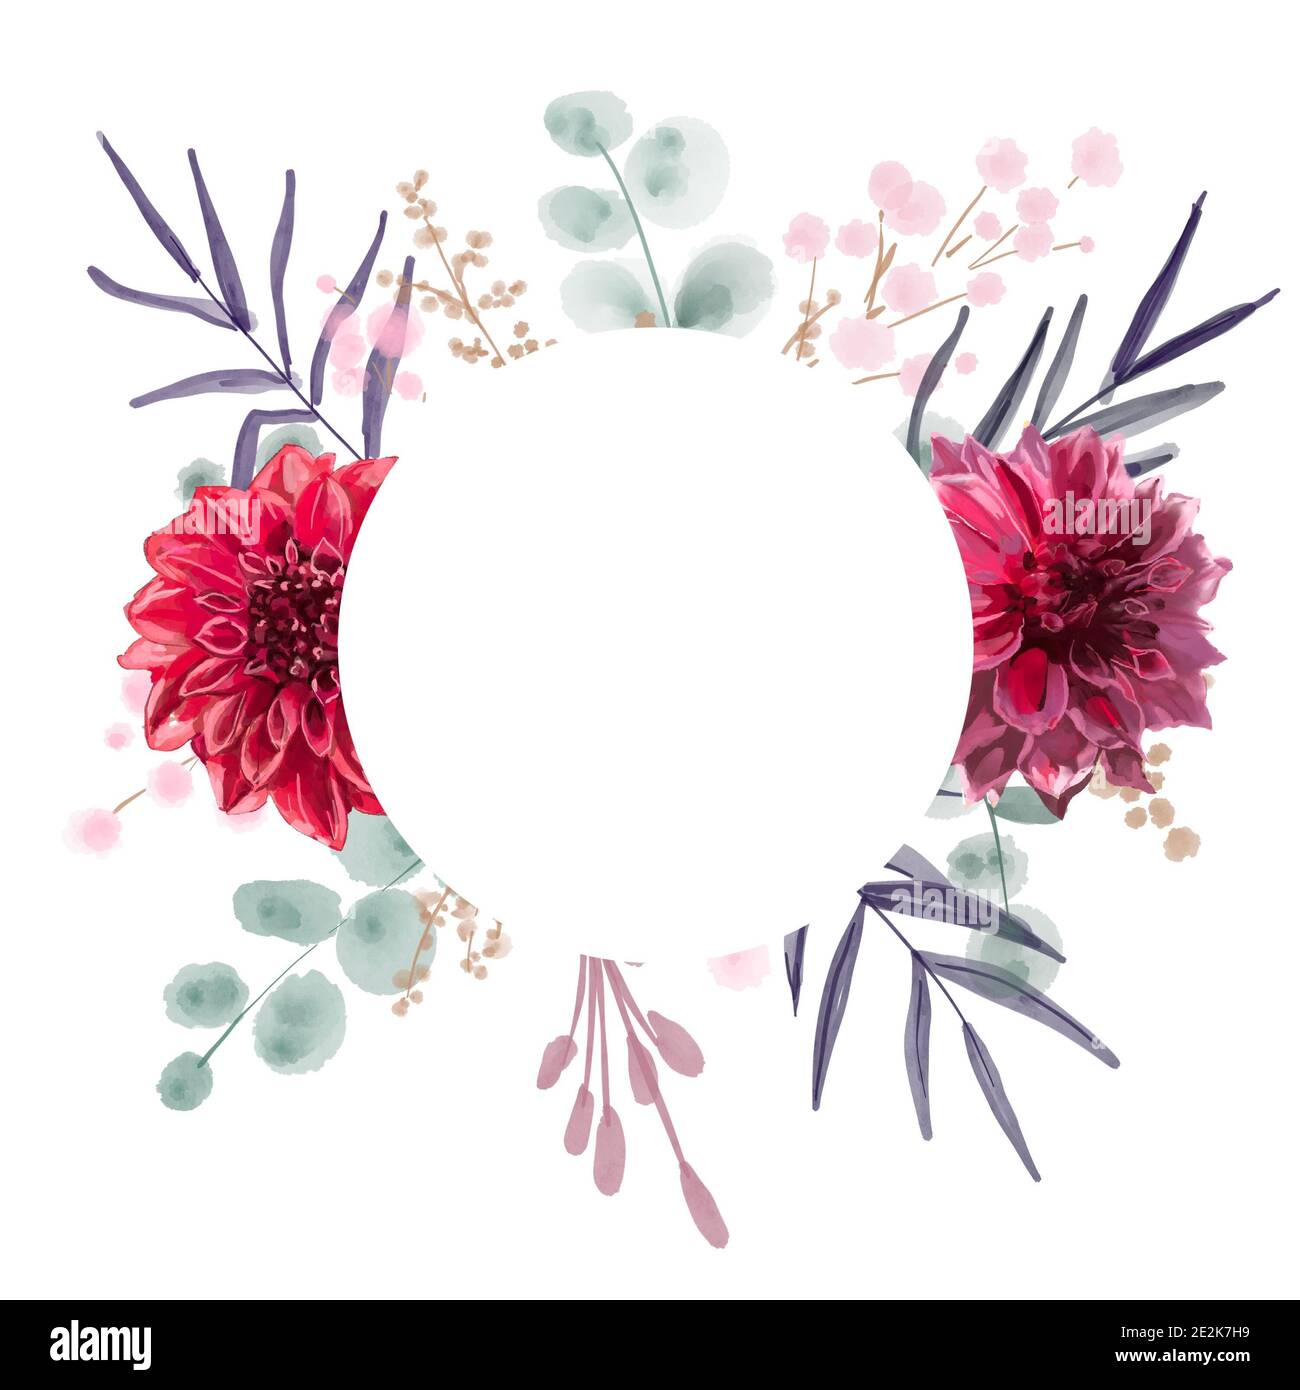 Beautiful stock illustration with gentle hand drawn watercolor flower arrangement. Dahlia flowers. Stock Photo